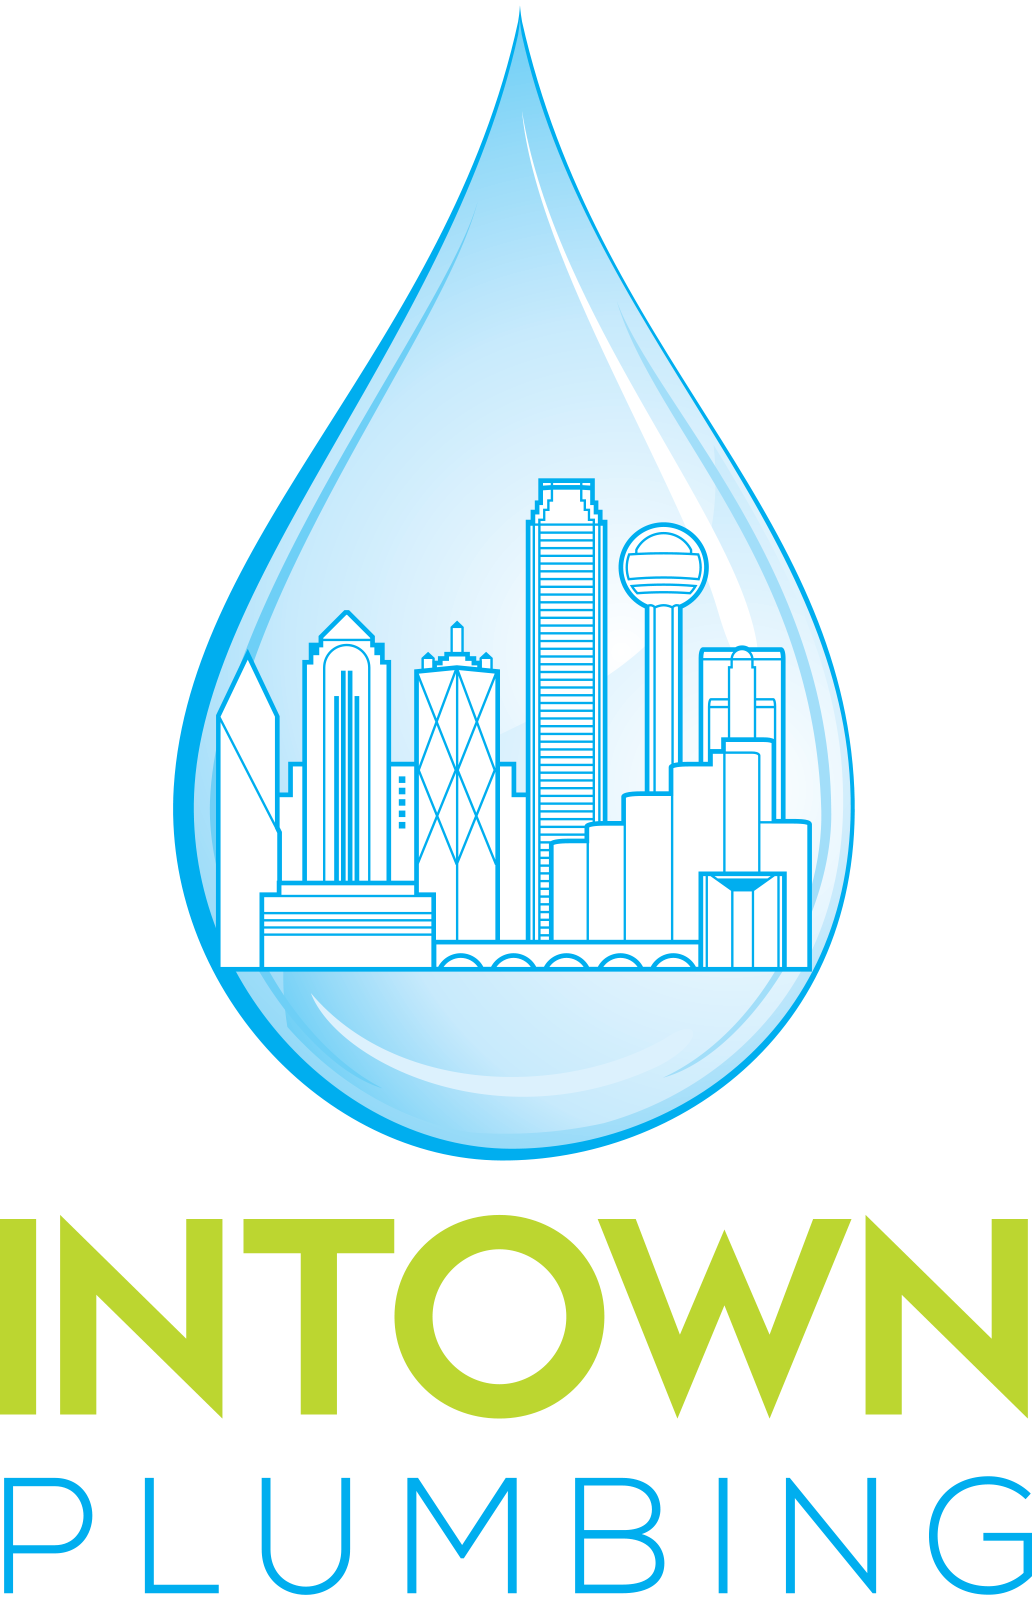 Intown Plumbing, TX logo with a water droplet, symbolizing expert plumbing wor